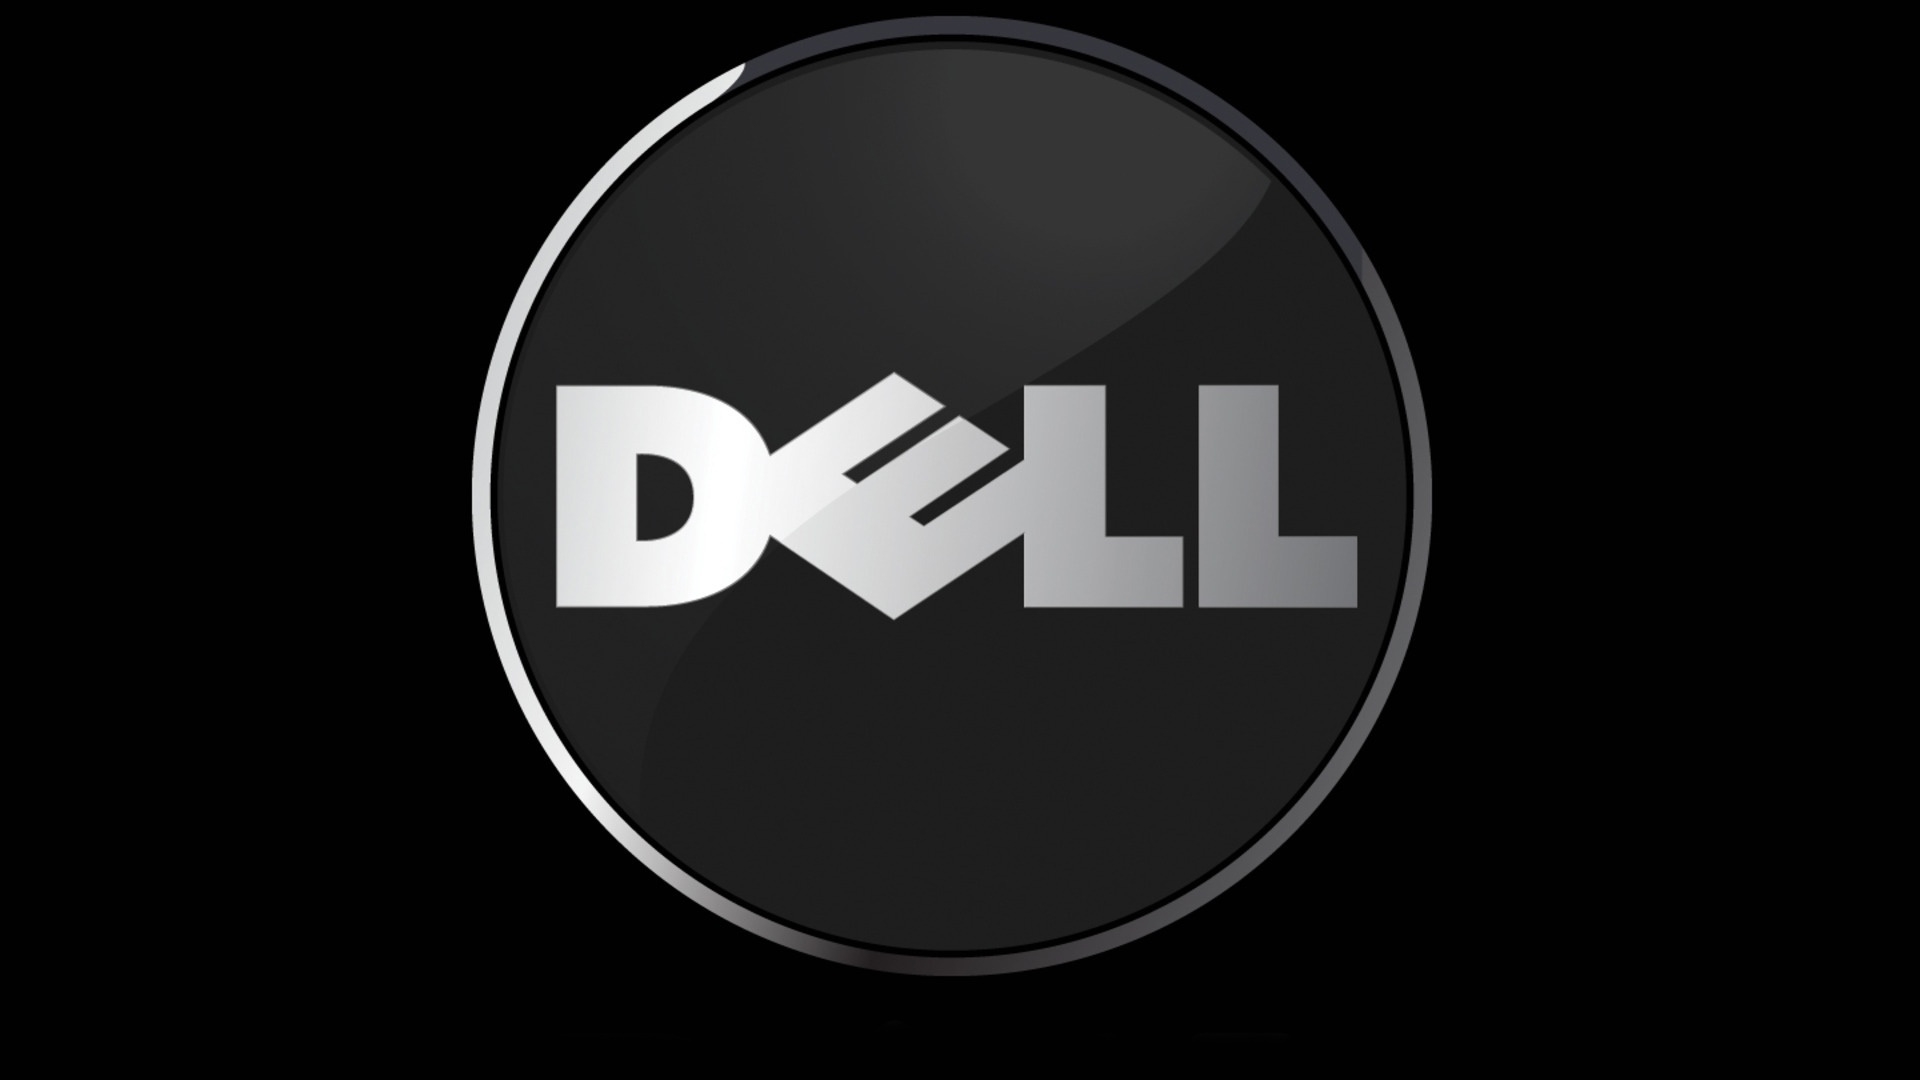 Dell black background for 1920 x 1080 HDTV 1080p resolution